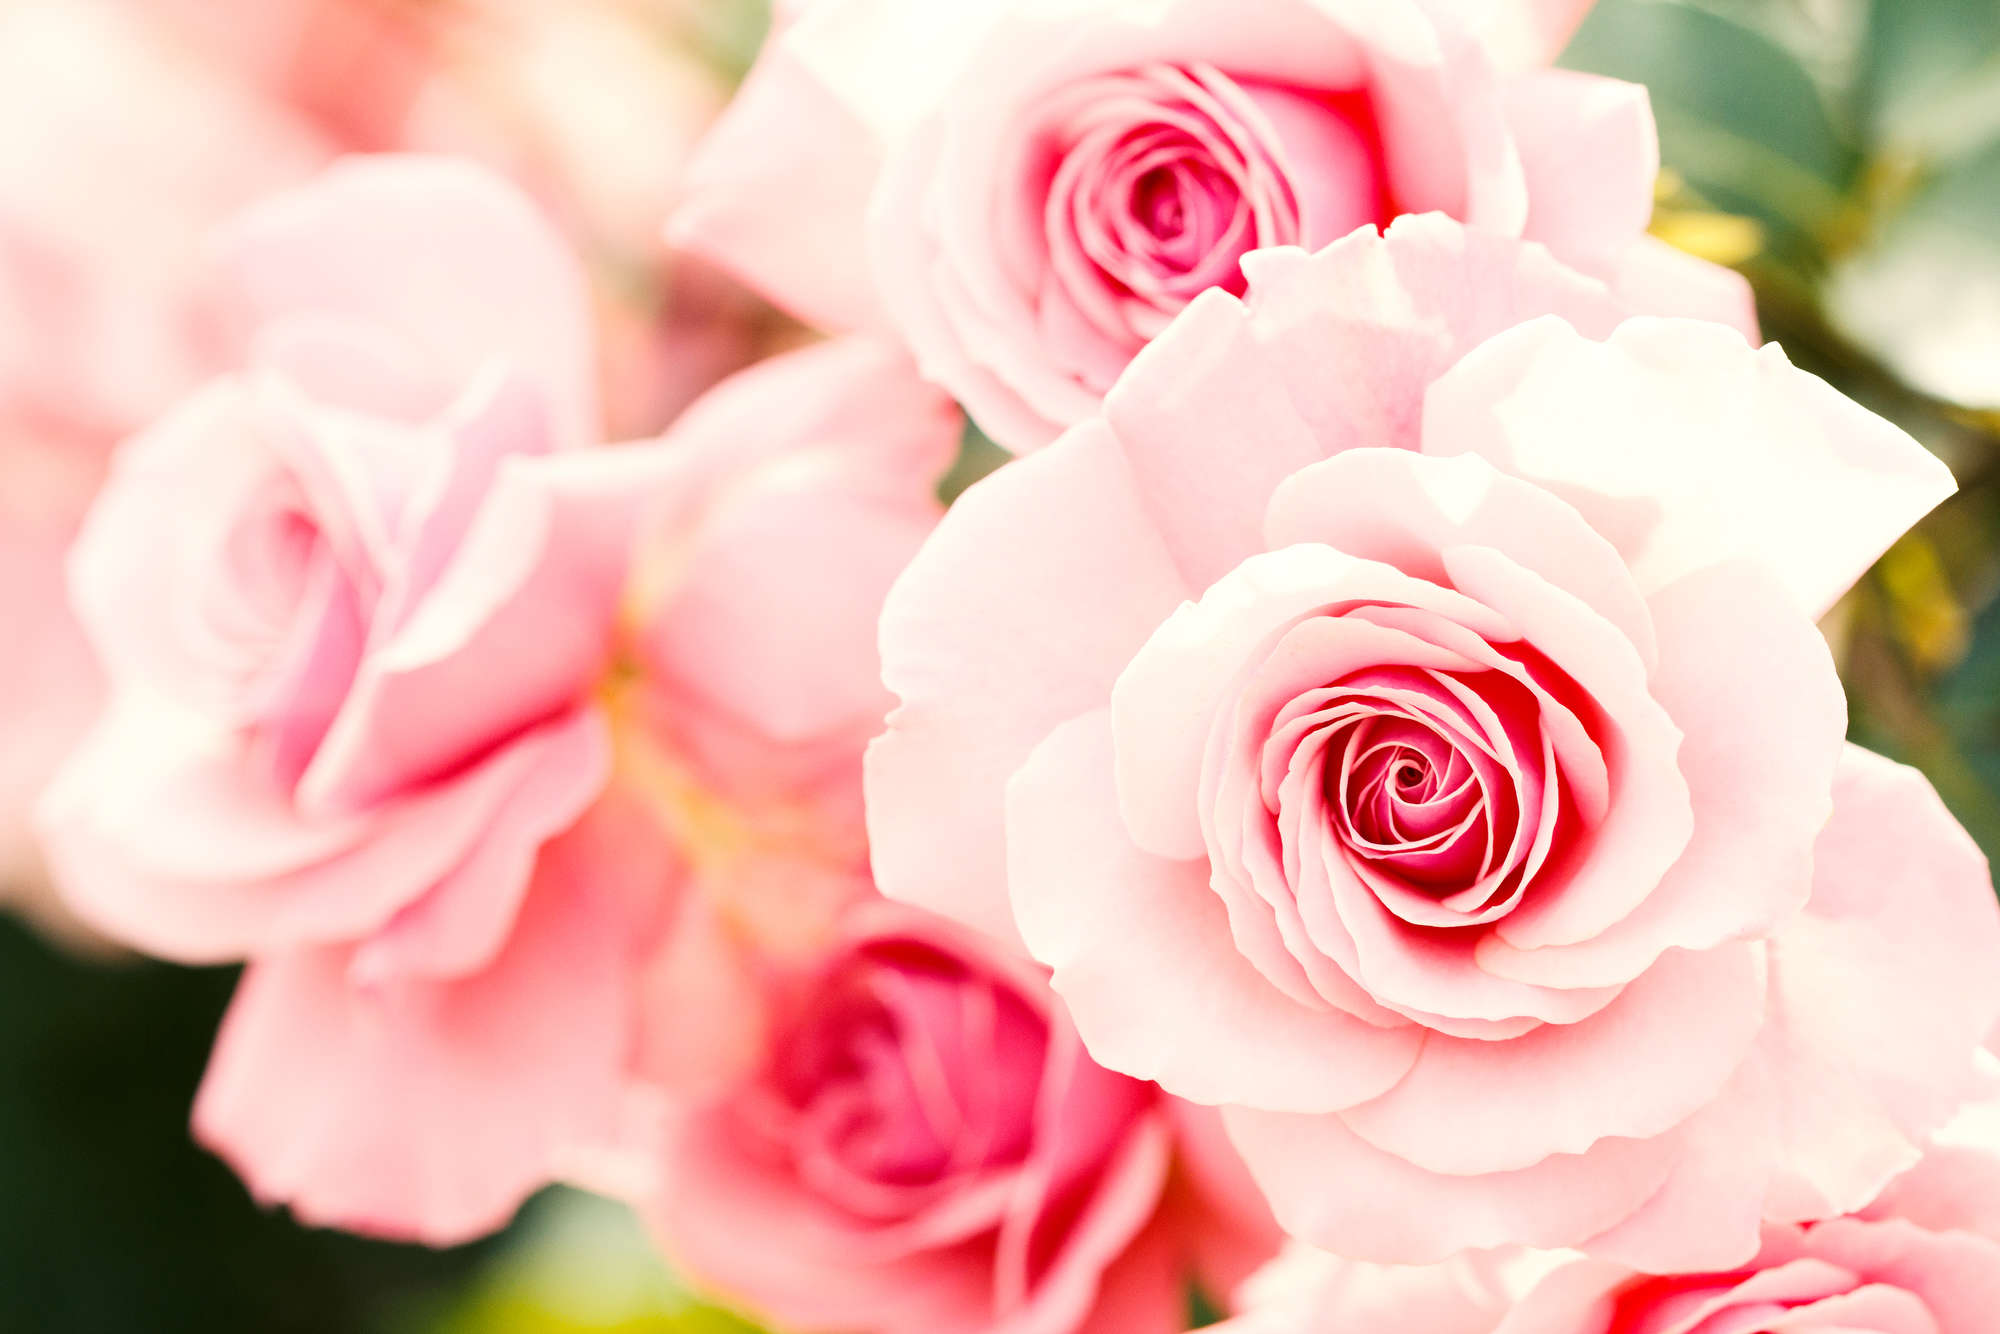             Pflanzen Fototapete rosa Rosen auf Strukturvlies
        